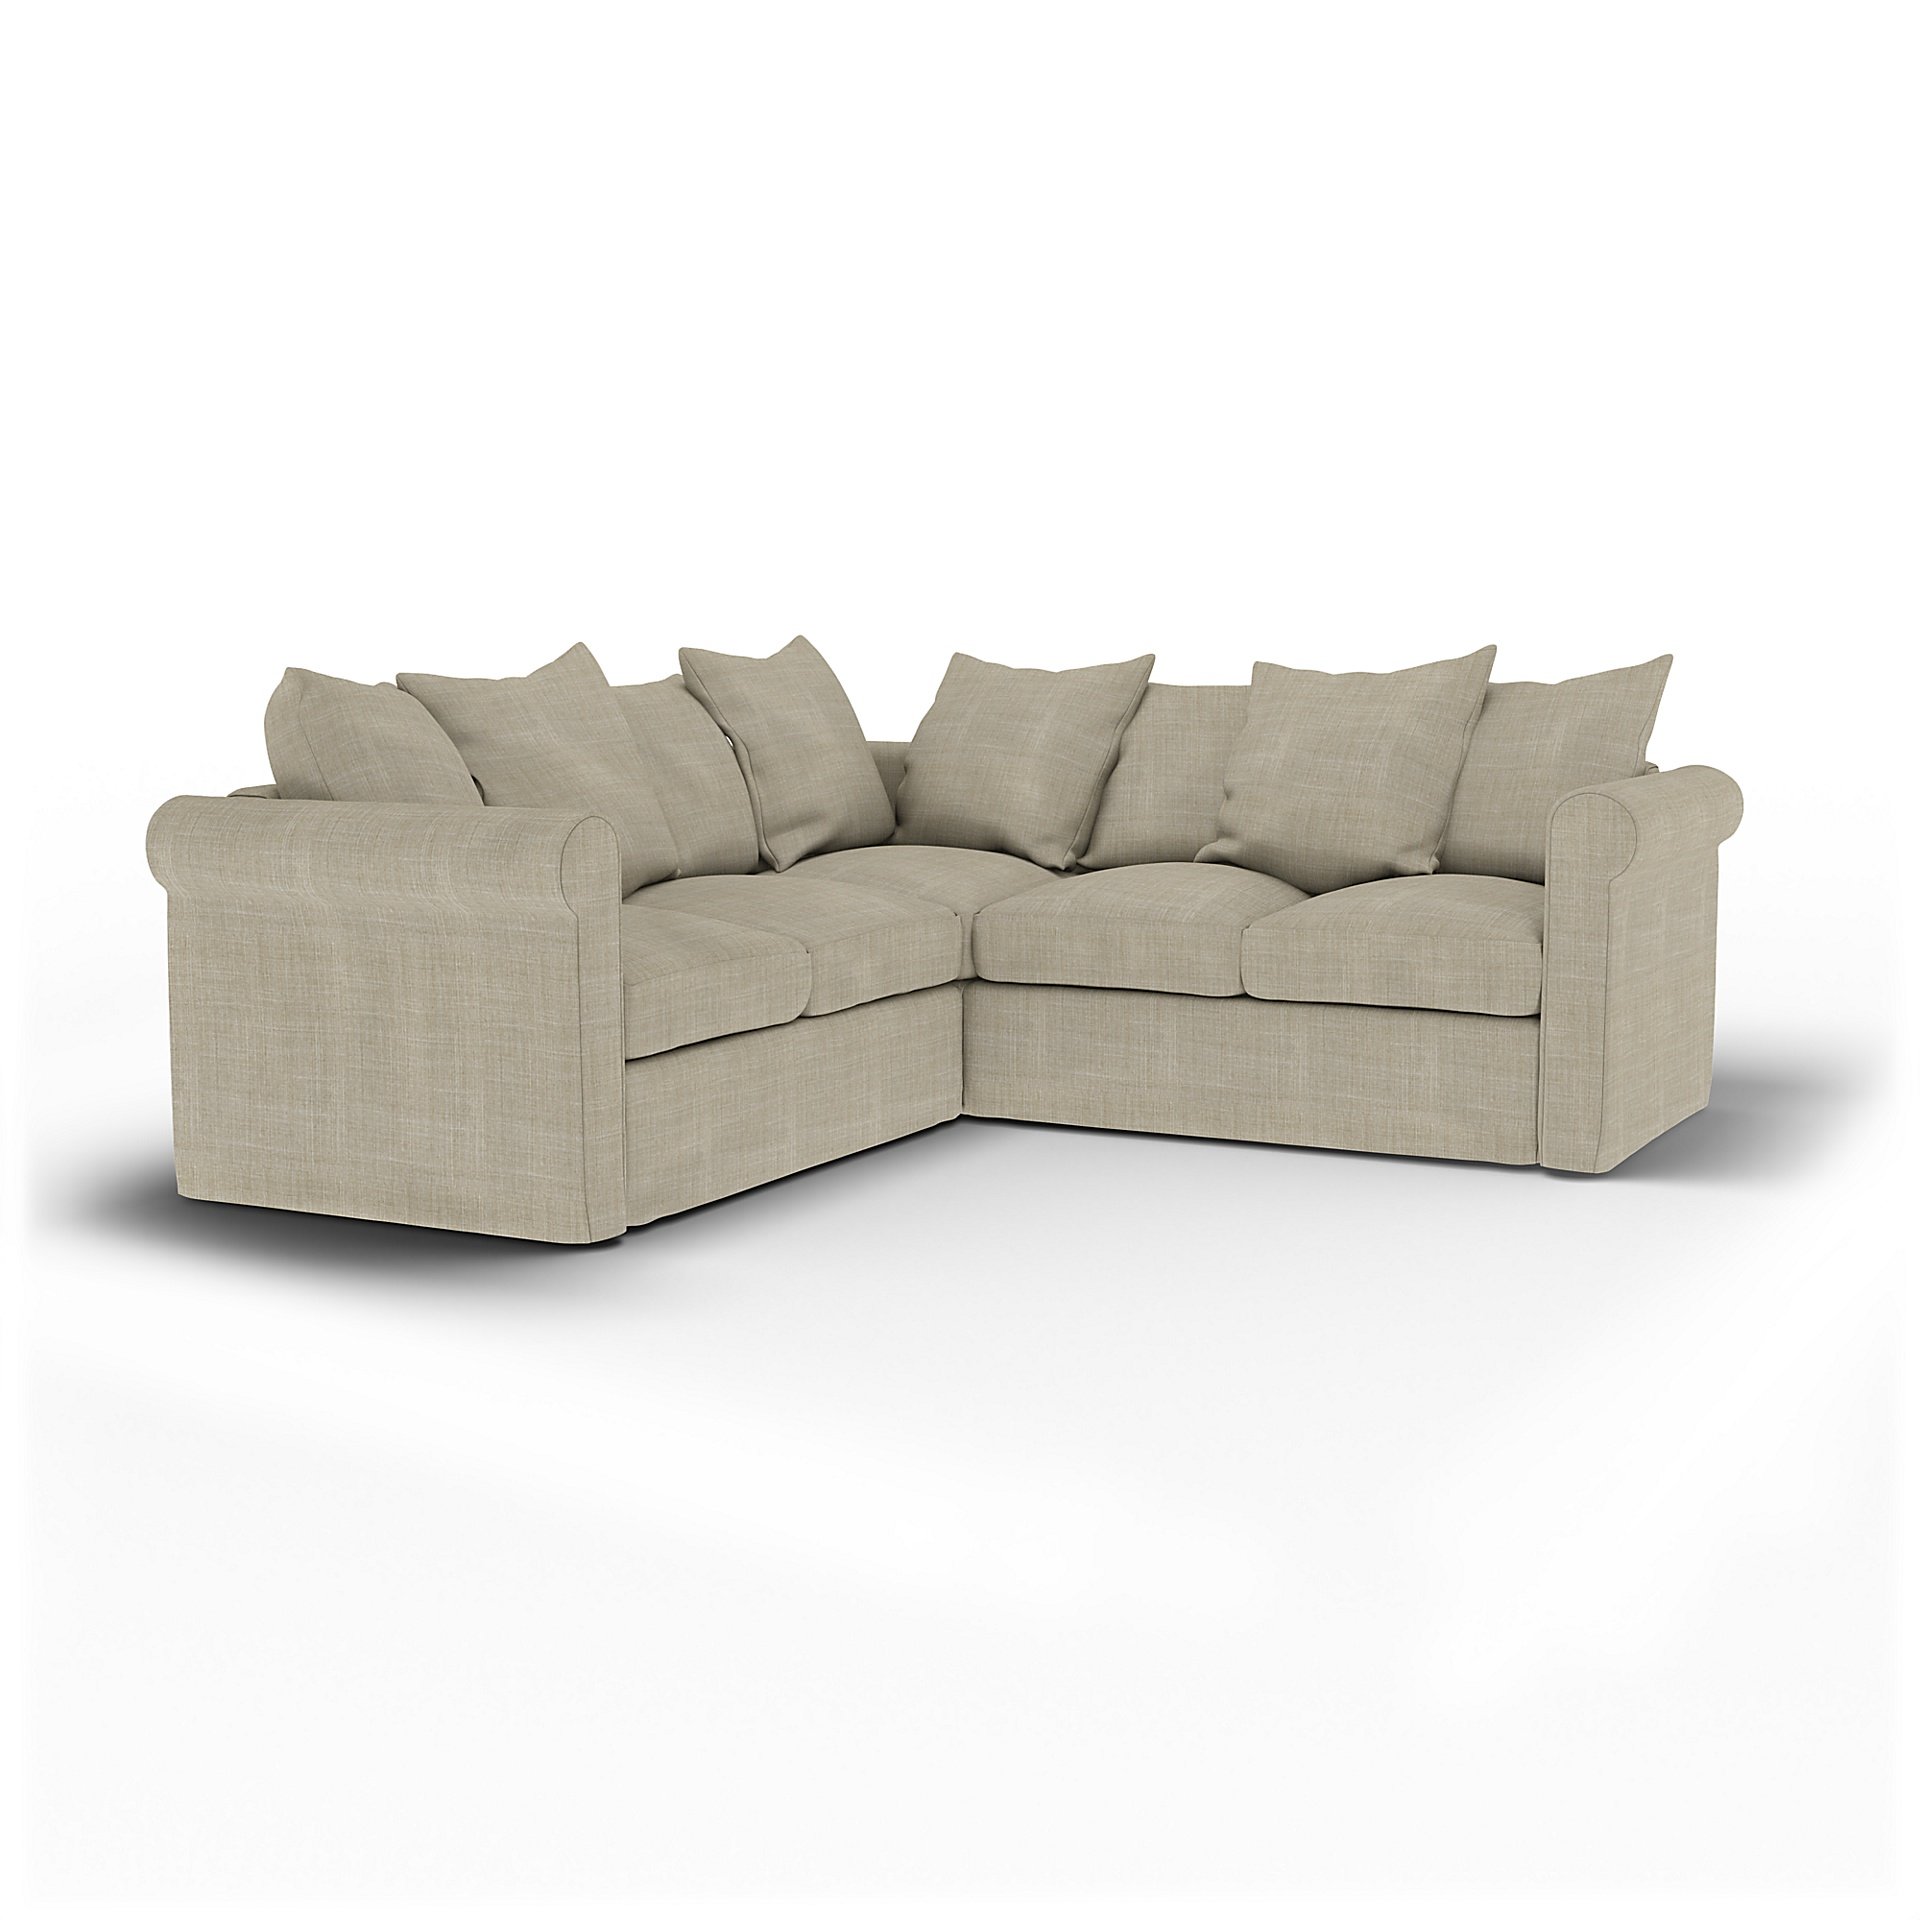 IKEA - Gronlid 4 Seater Corner Sofa Cover, Sand Beige, Boucle & Texture - Bemz